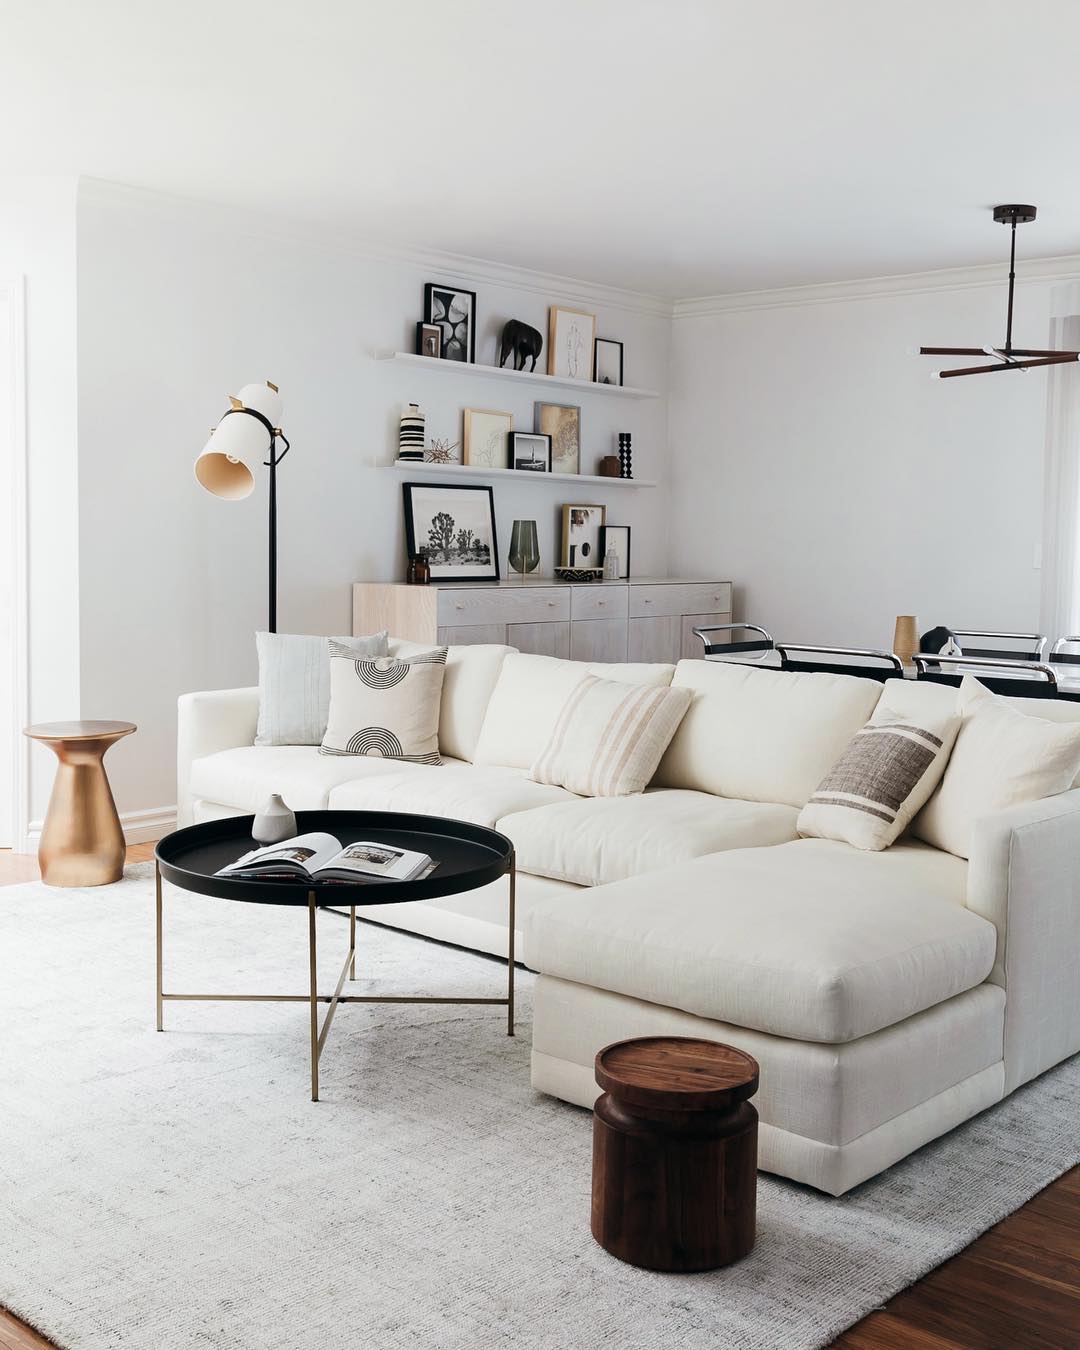 Minimalist living room. Photo by Instagram user @monicawangphoto